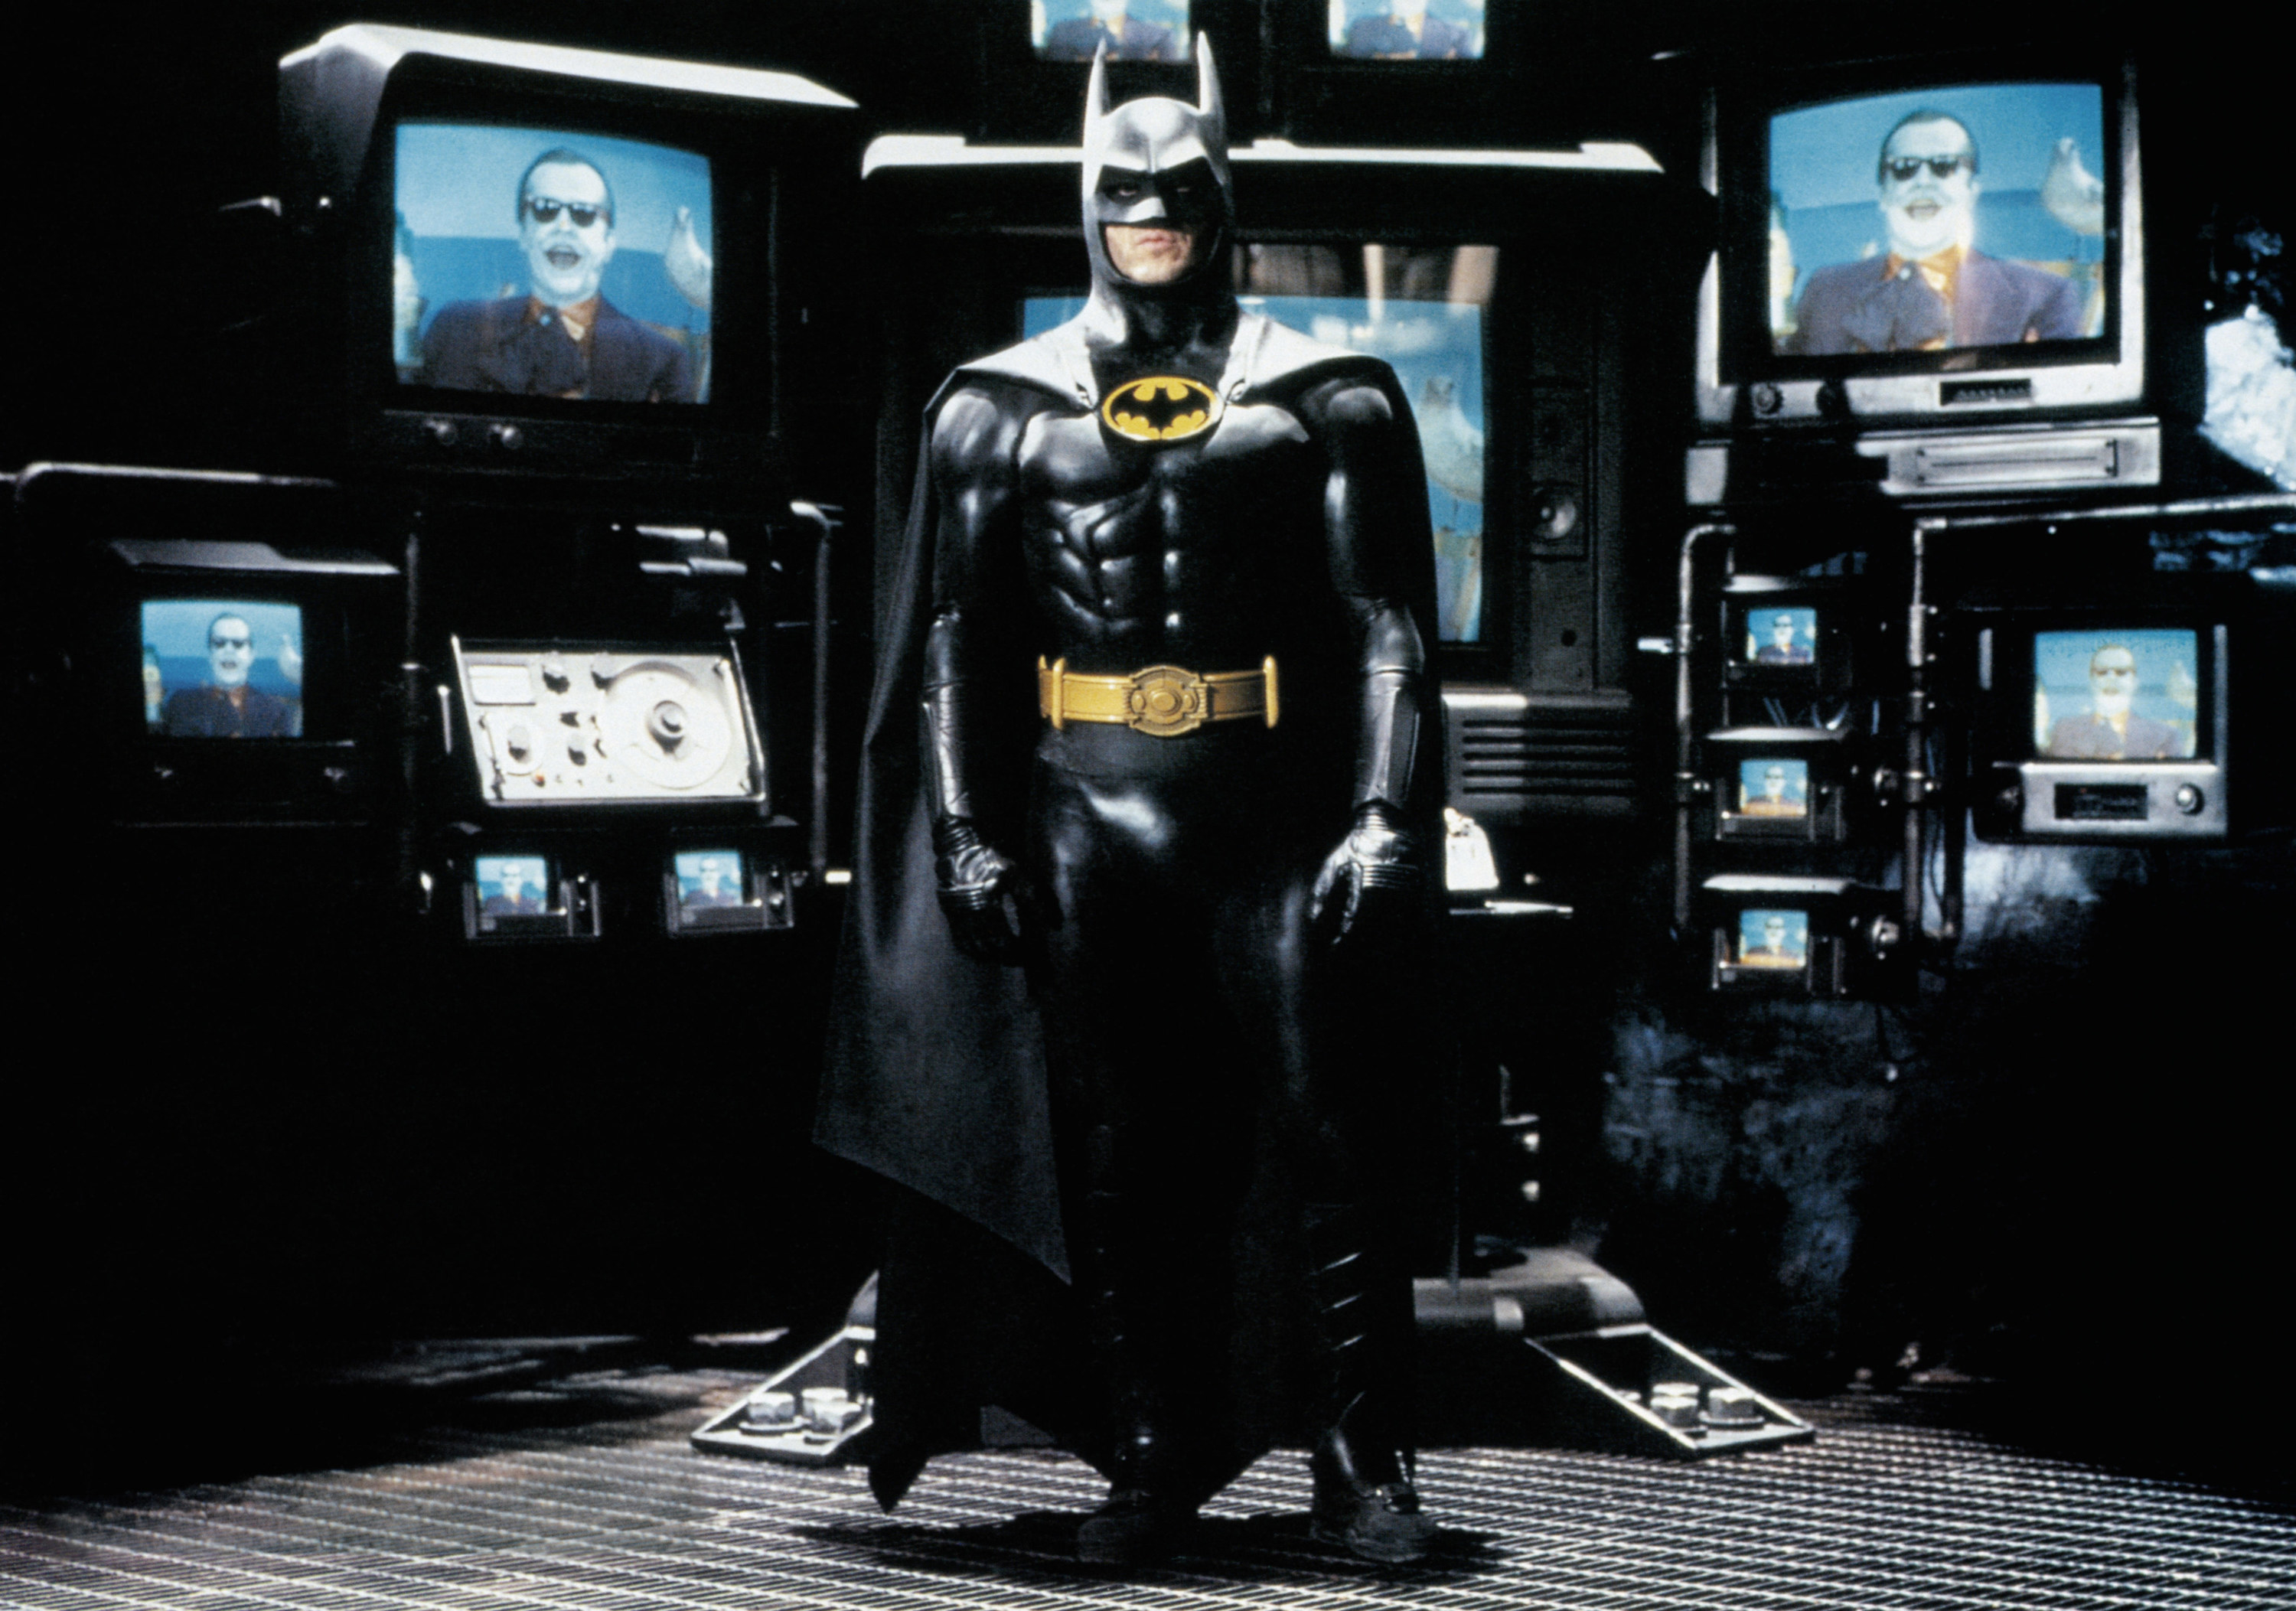 Batman stares near multiple television monitors featuring the Joker